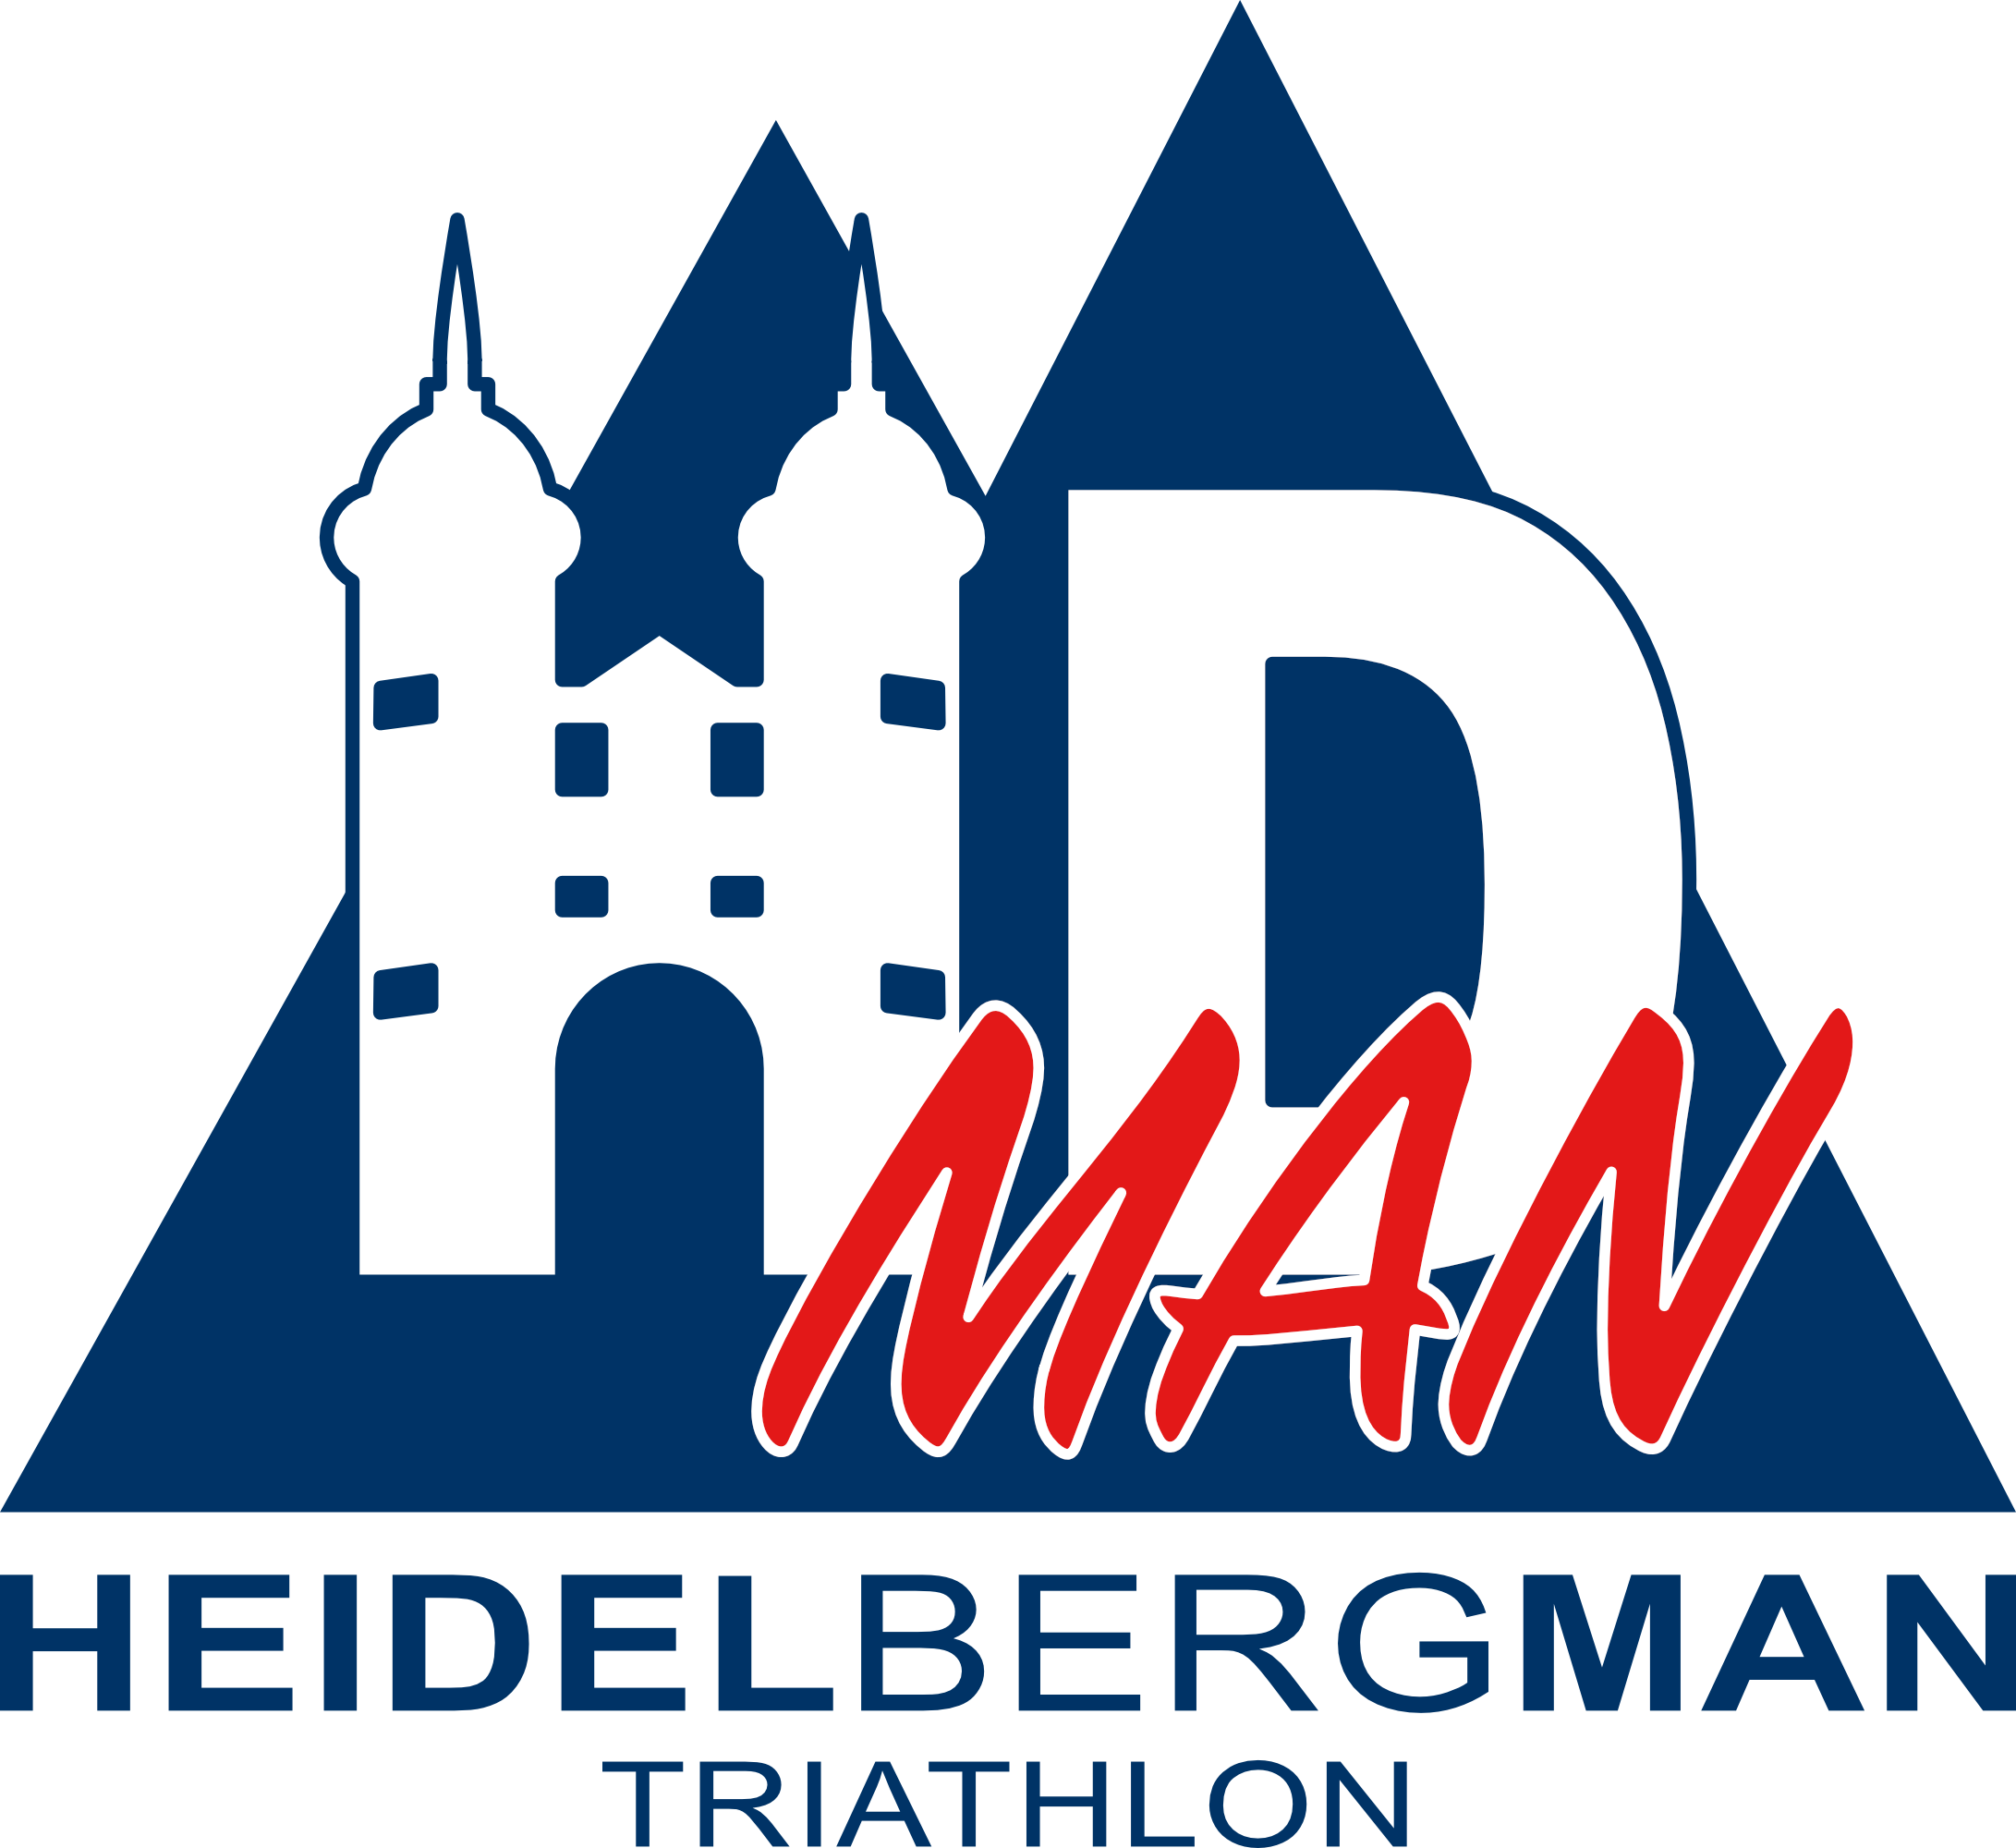 HeidelbergMan Logo